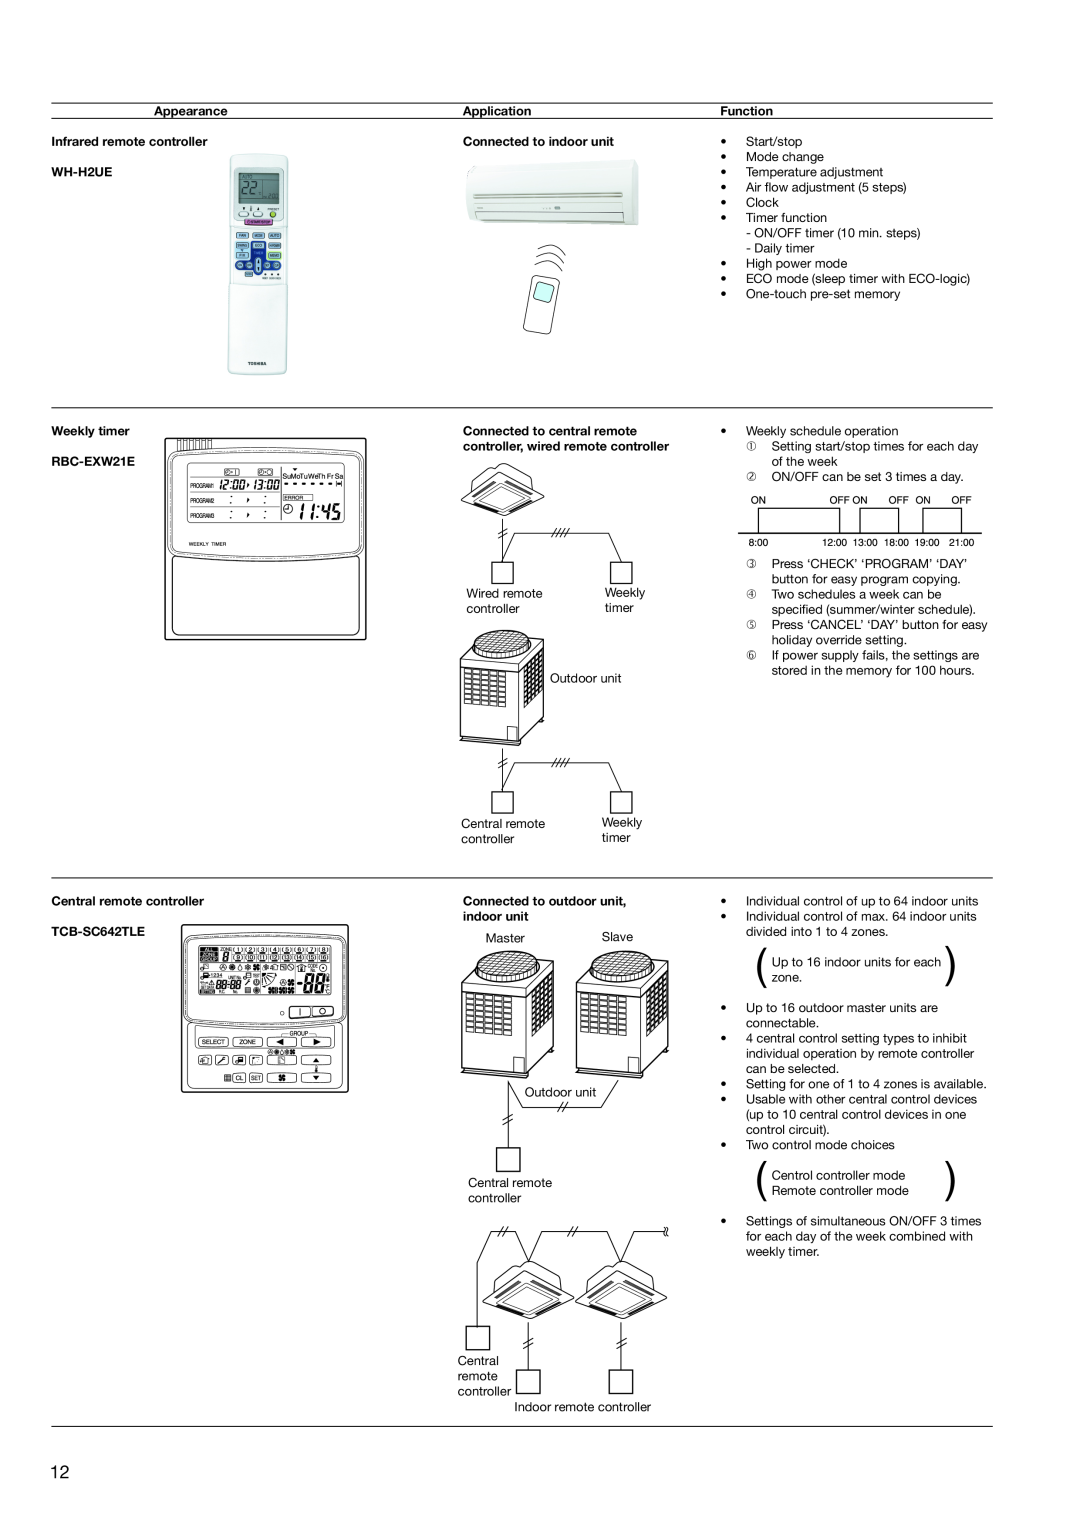 Toshiba HFC R-410A manual Appearance 